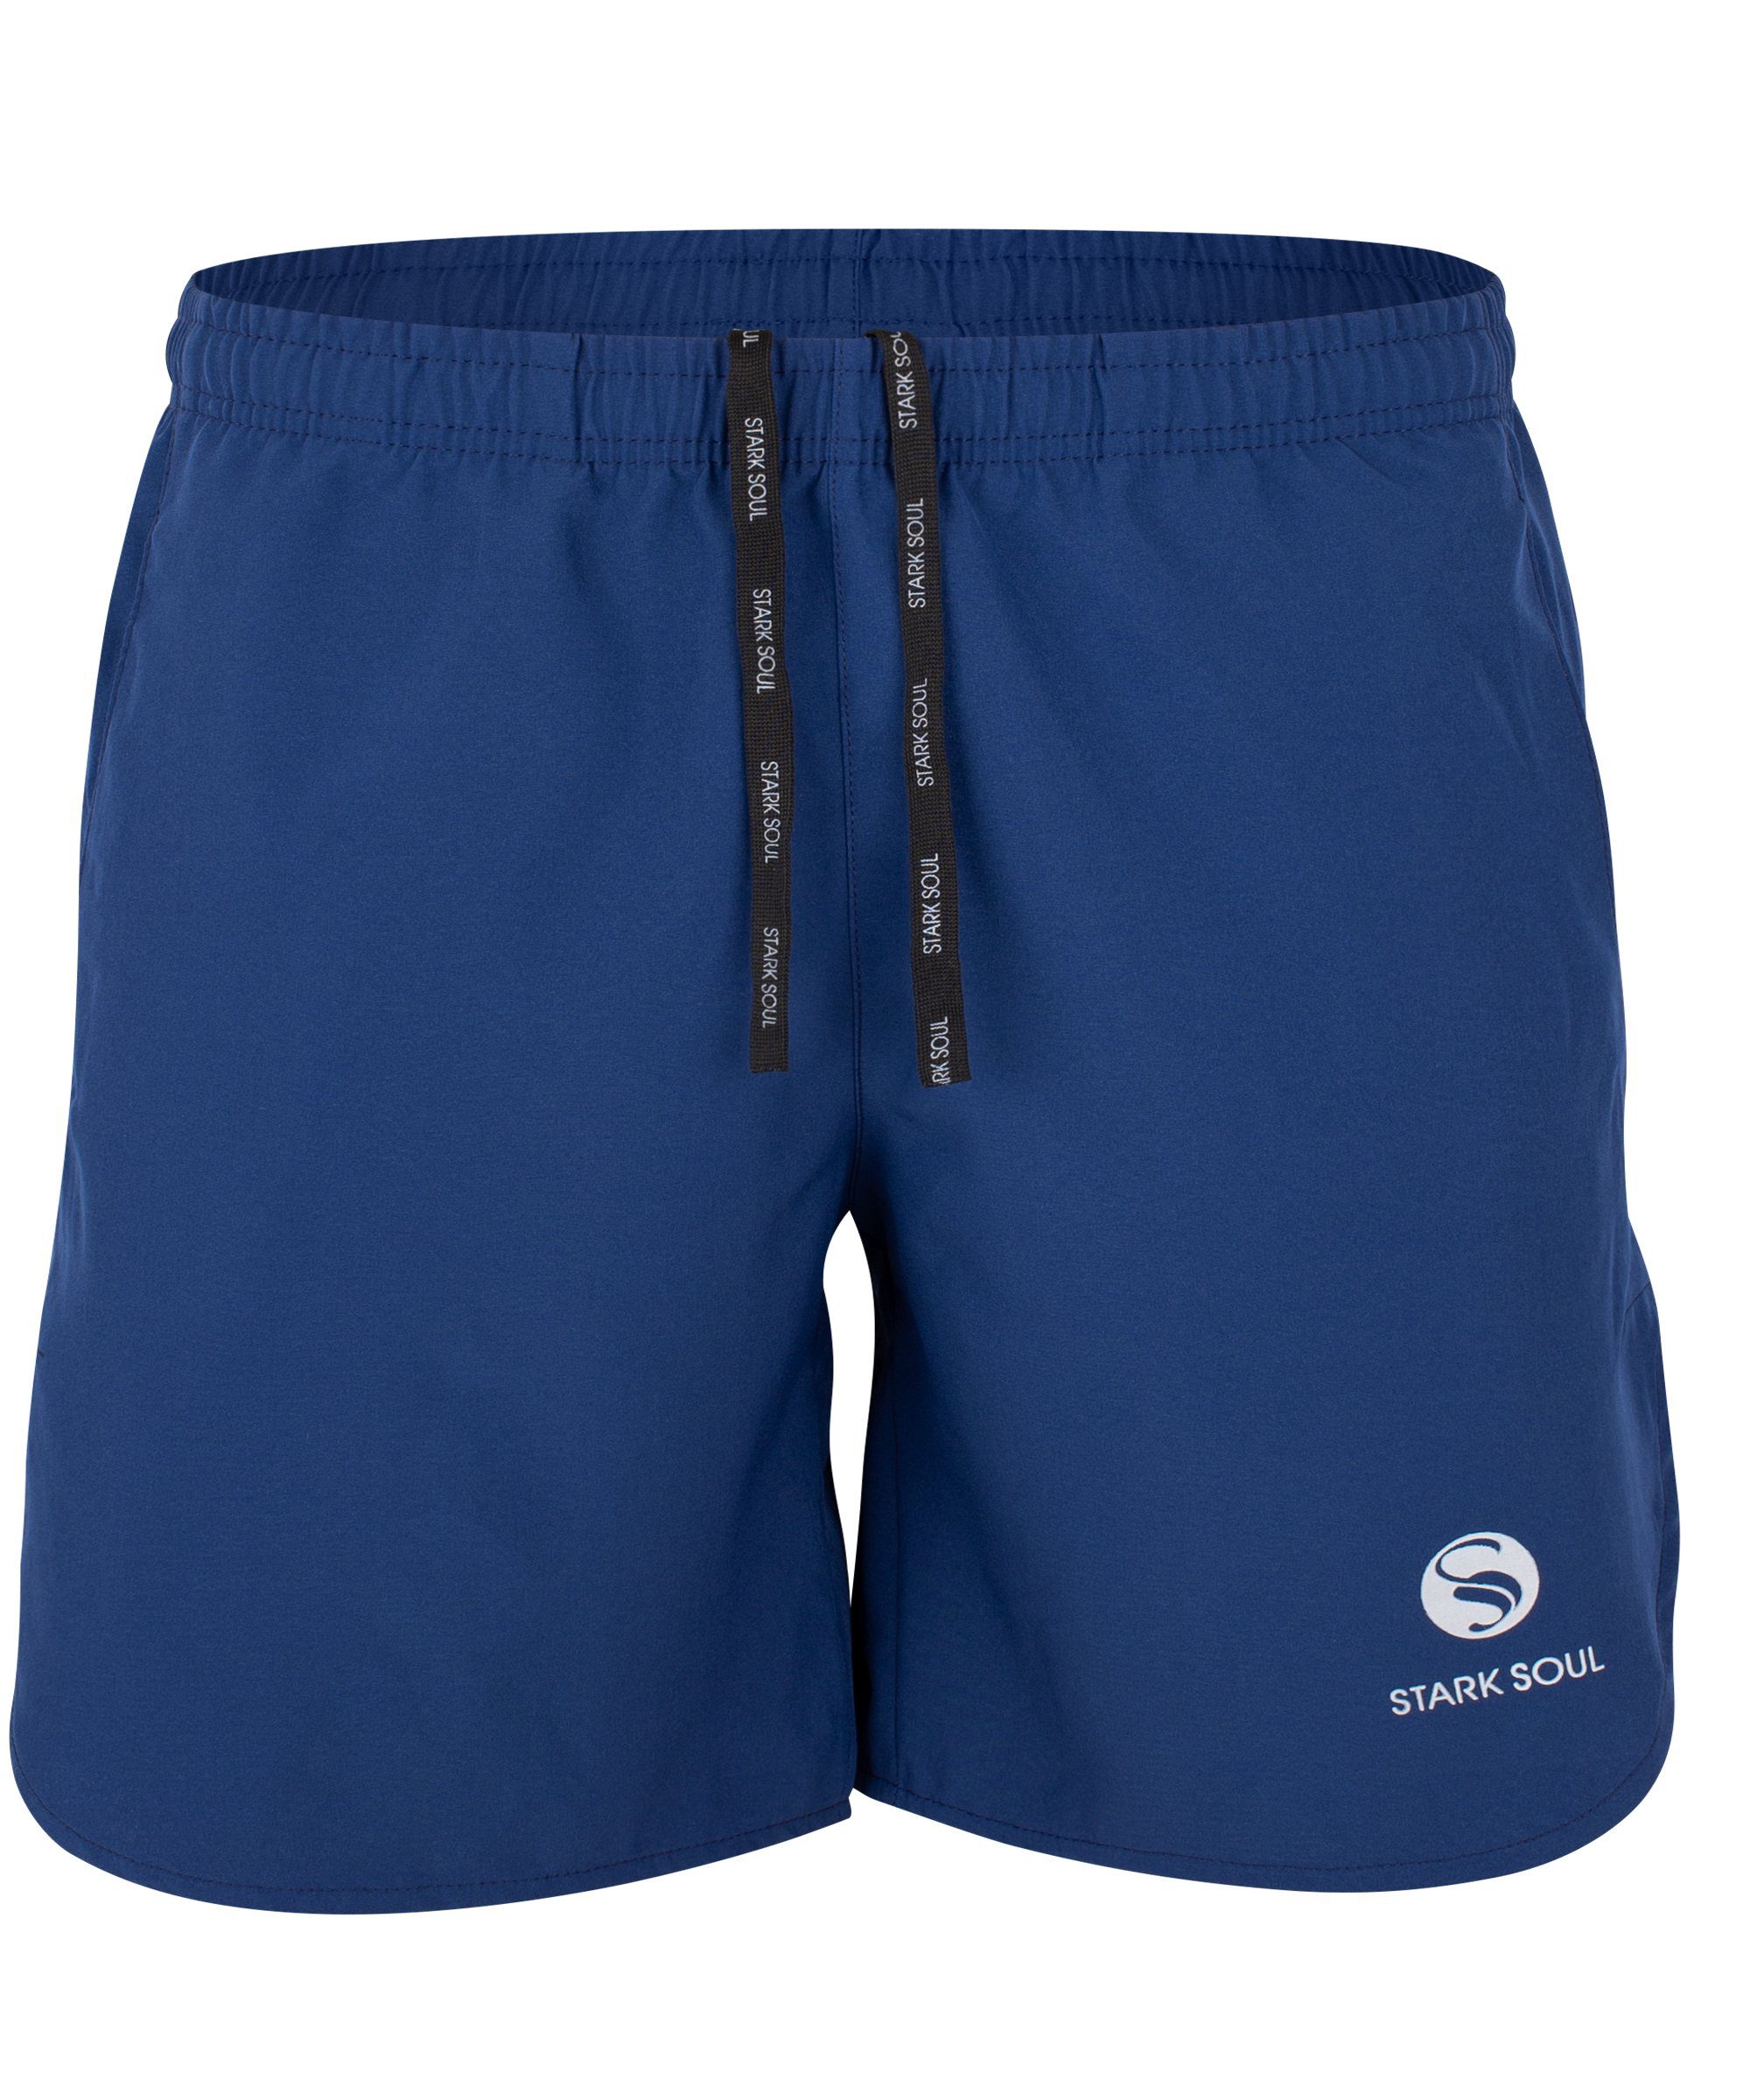 Stark Soul® Funktionshose kurze Sporthose Schnelltrocknend - Dry Quick Material Marineblau aus